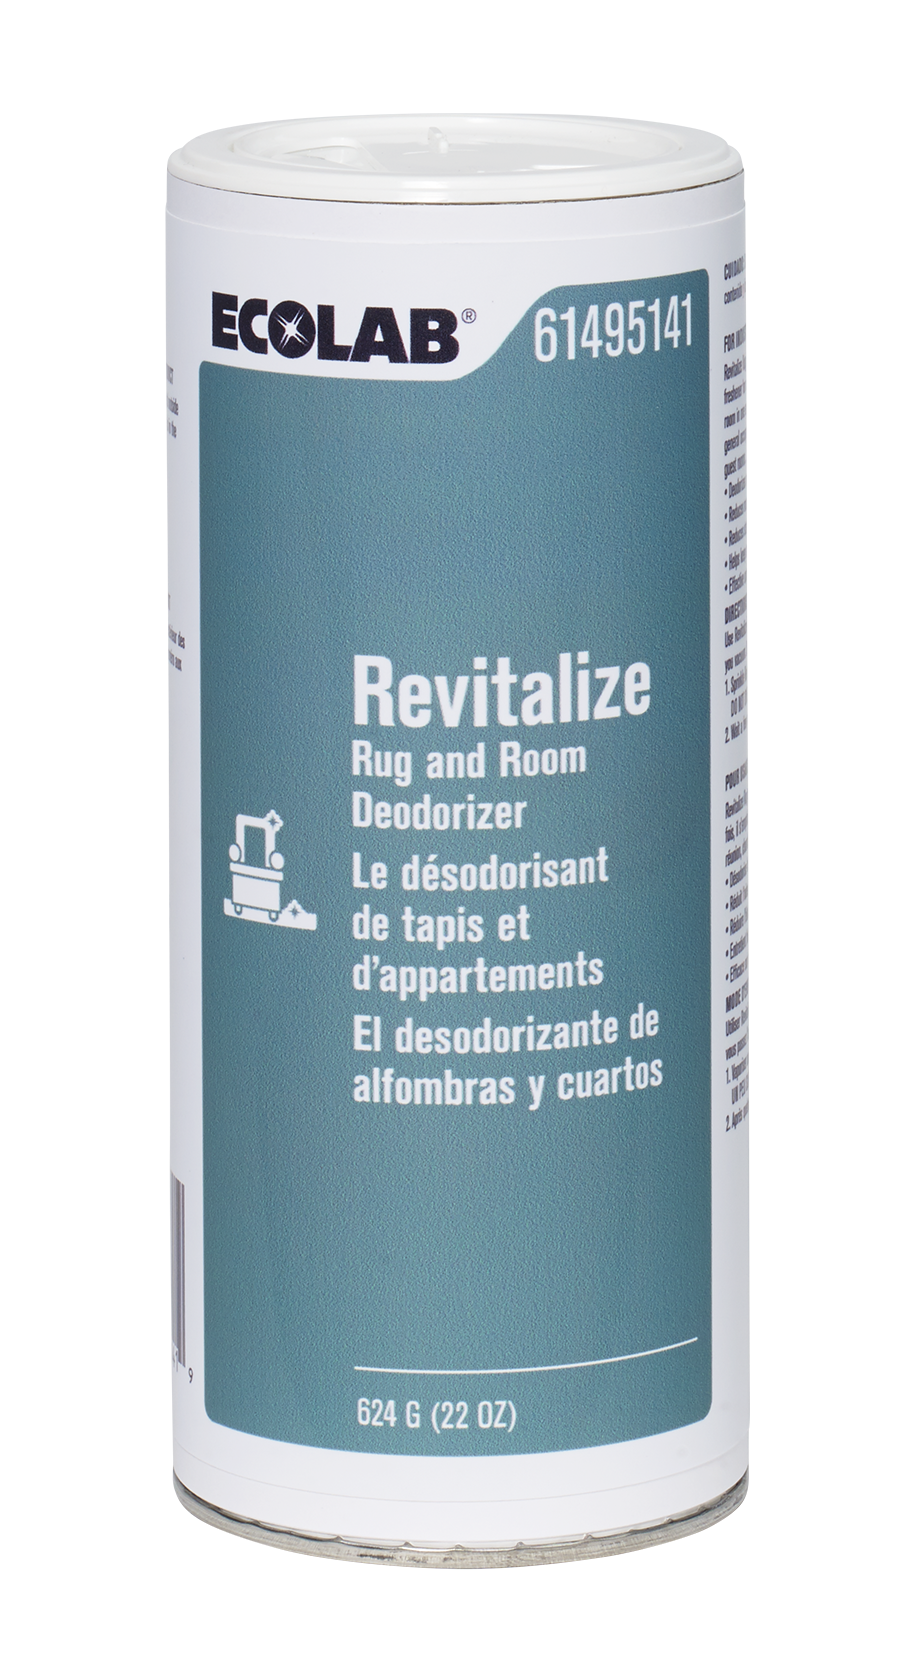 Revitalize Rug and Room Deodorizer